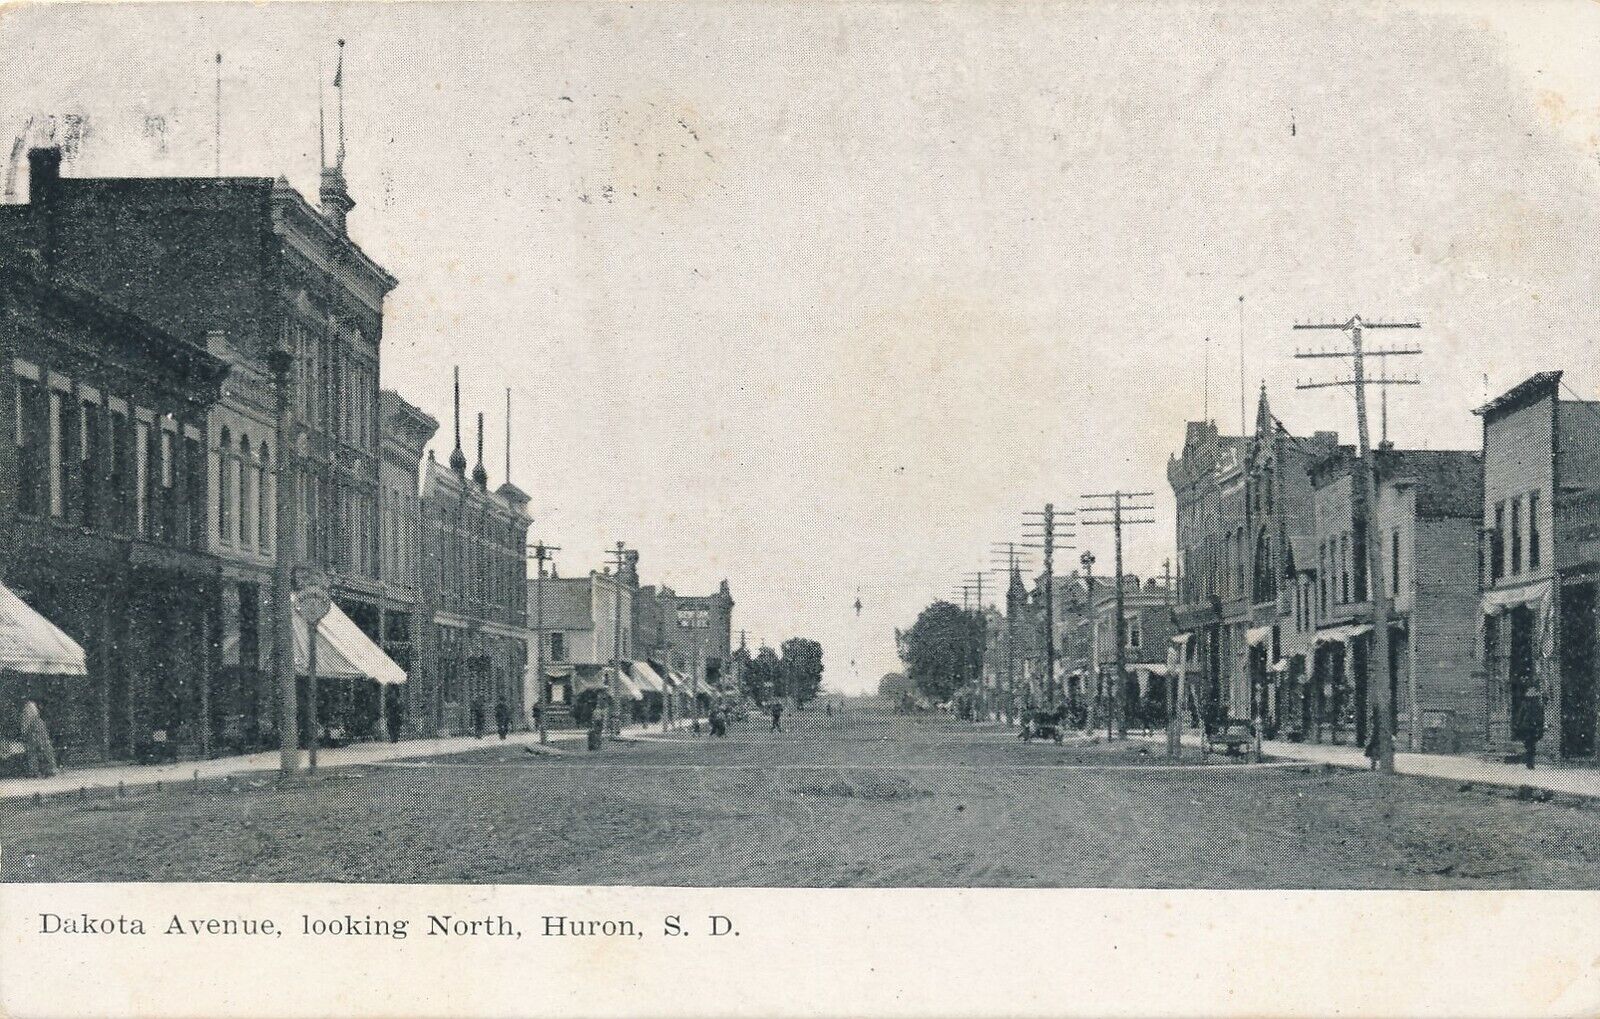 HURON SD – Dakota Avenue looking North